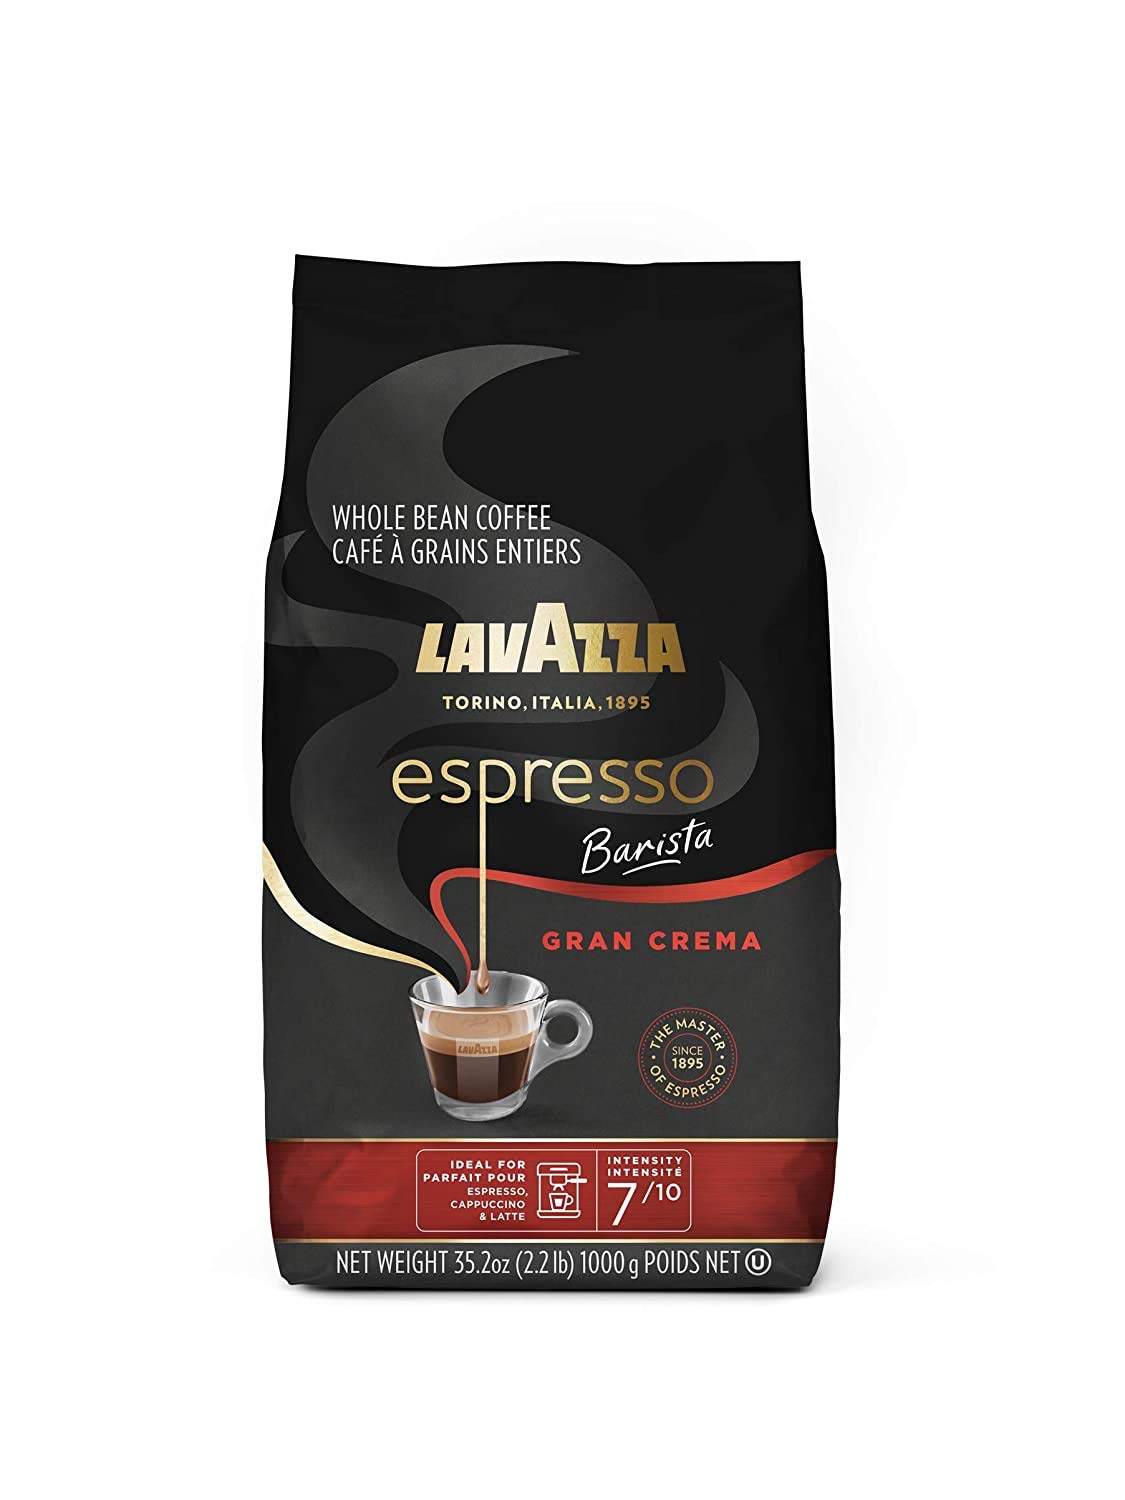 Lavazza Espresso Barista Gran Crema Whole Bean Coffee Blend, Medium Espresso Roast, Bag (Packaging May Vary)